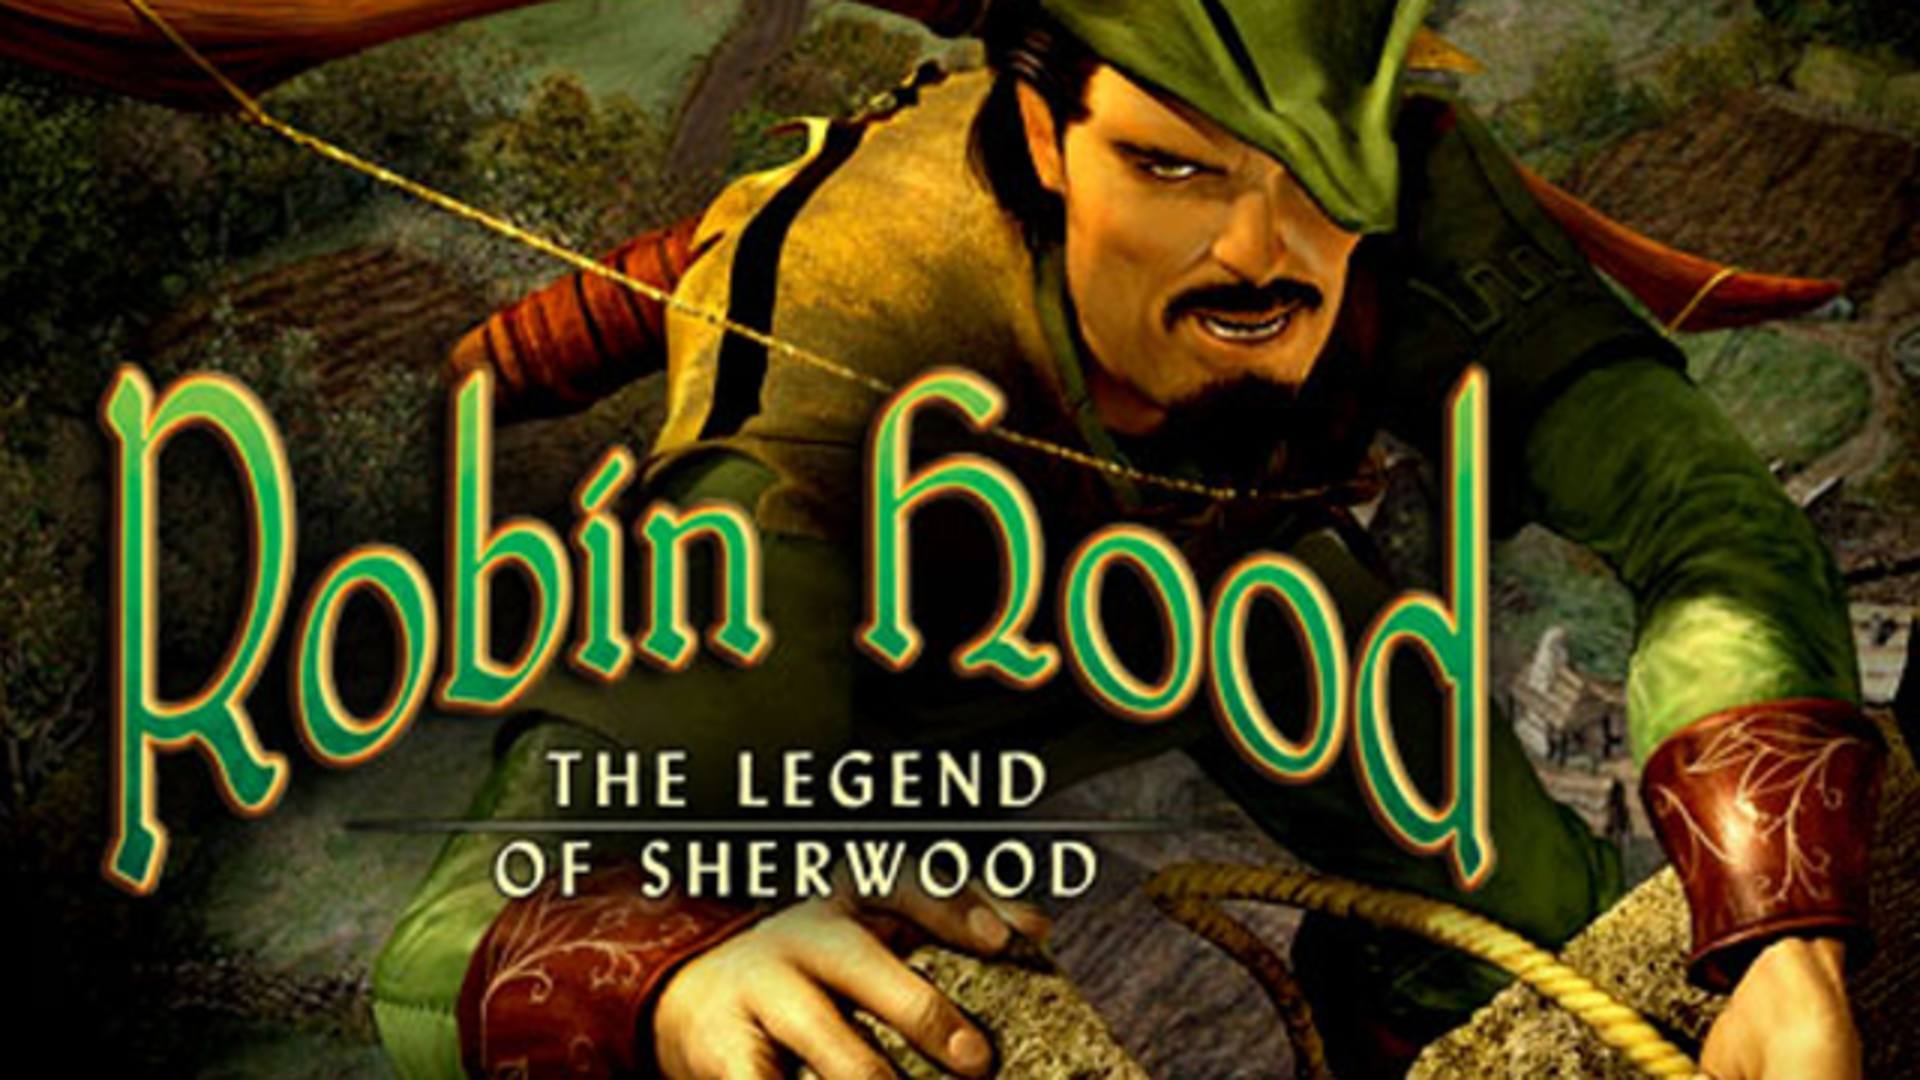 does robin hood the legend of sherwood disc need a key code